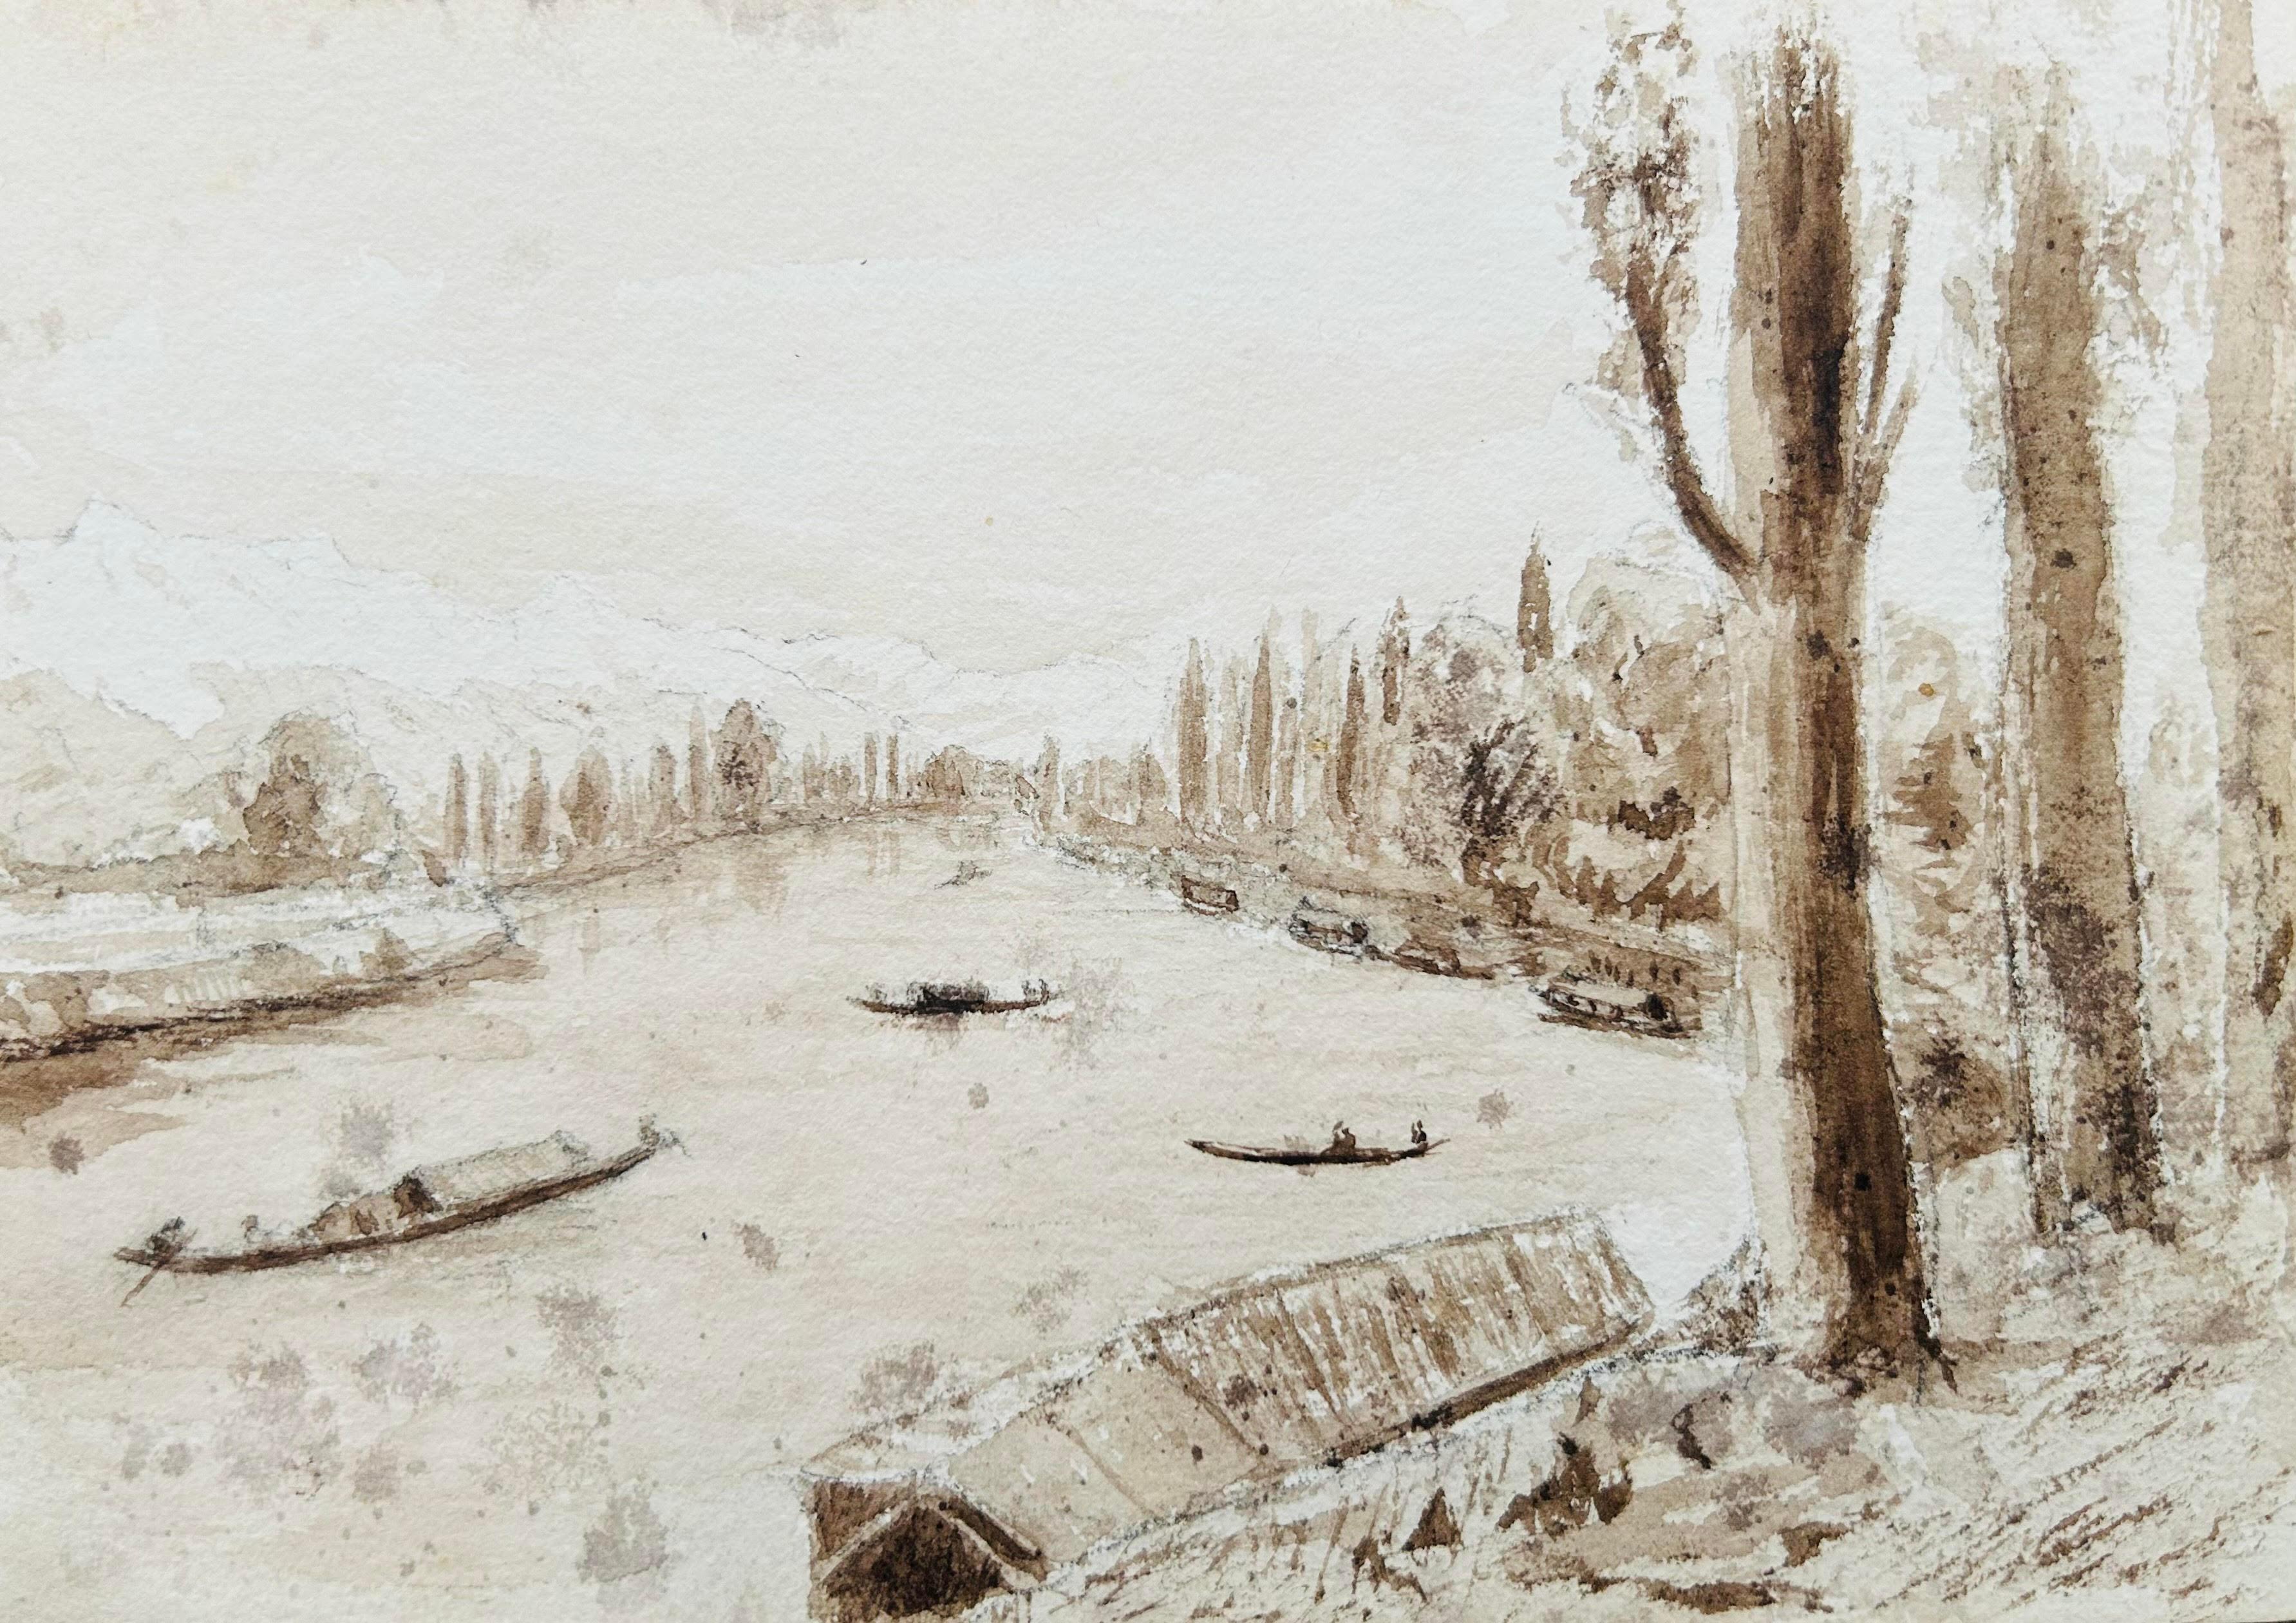 Unknown Landscape Art – India 3 X 19. Jahrhundert Kaschmir NW Frontier Field Sketches Manasbal Lake, Kashmir